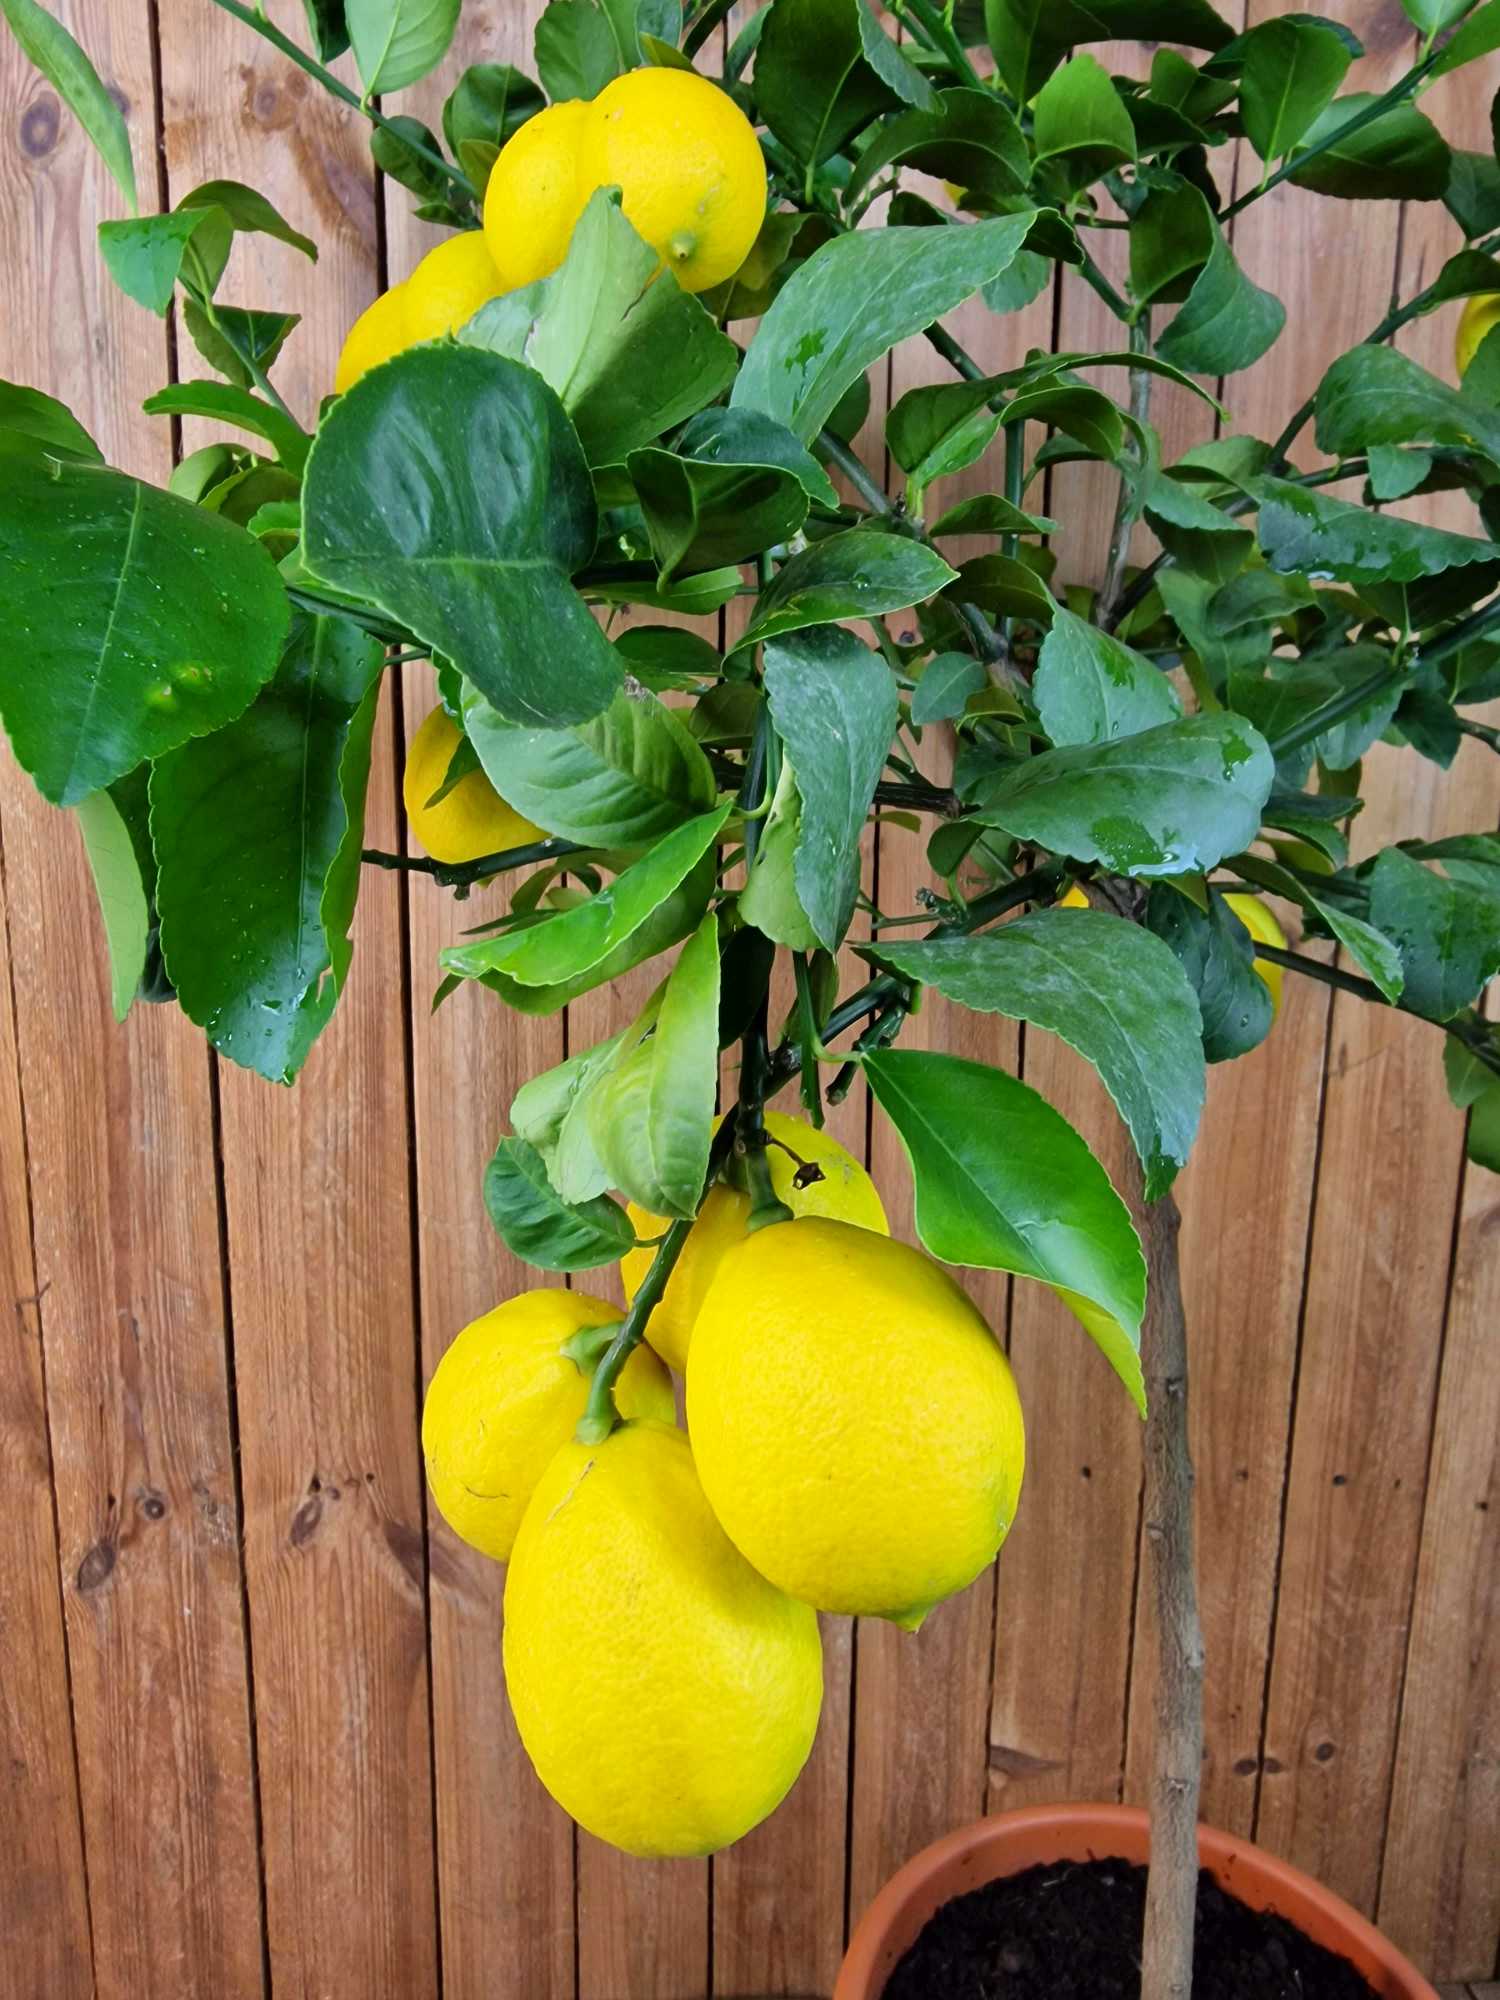 Meyer Zitrone   Citrus Limon 'meyeri'   Meyer Lemon